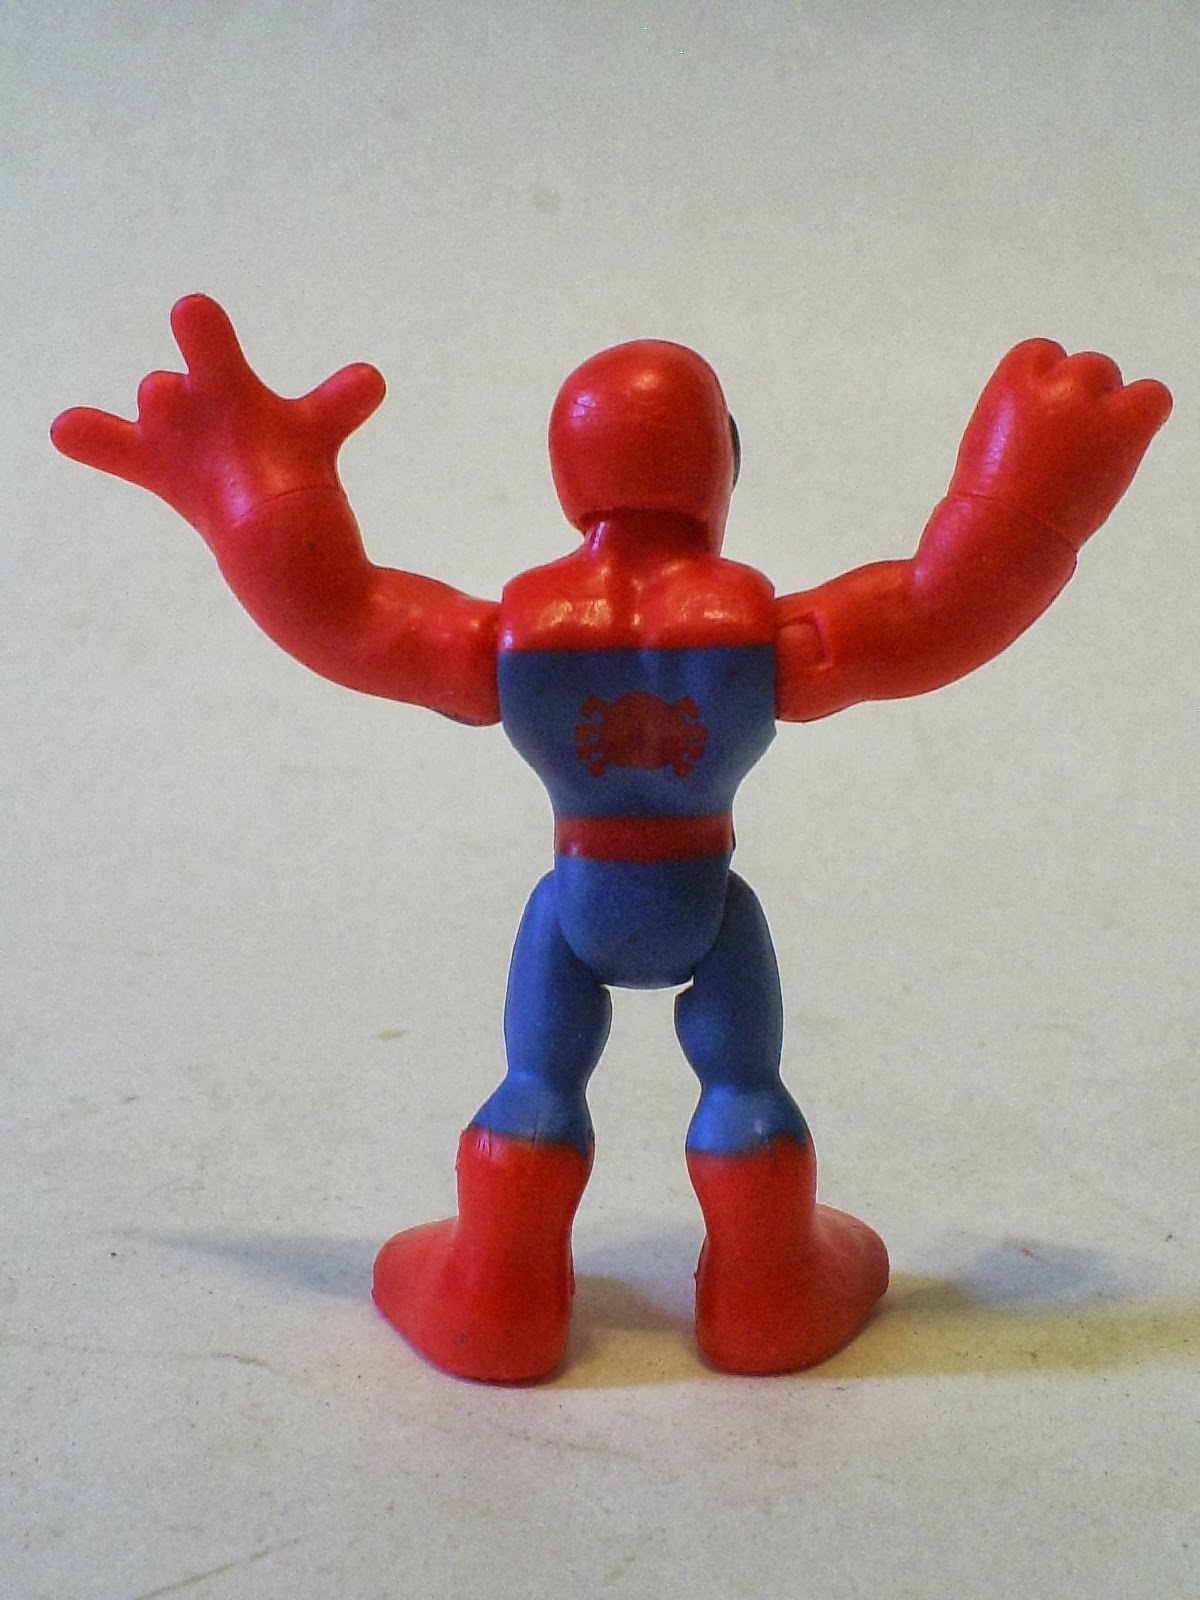 That Figures REVIEW Marvel Super Hero Adventures SpiderMan